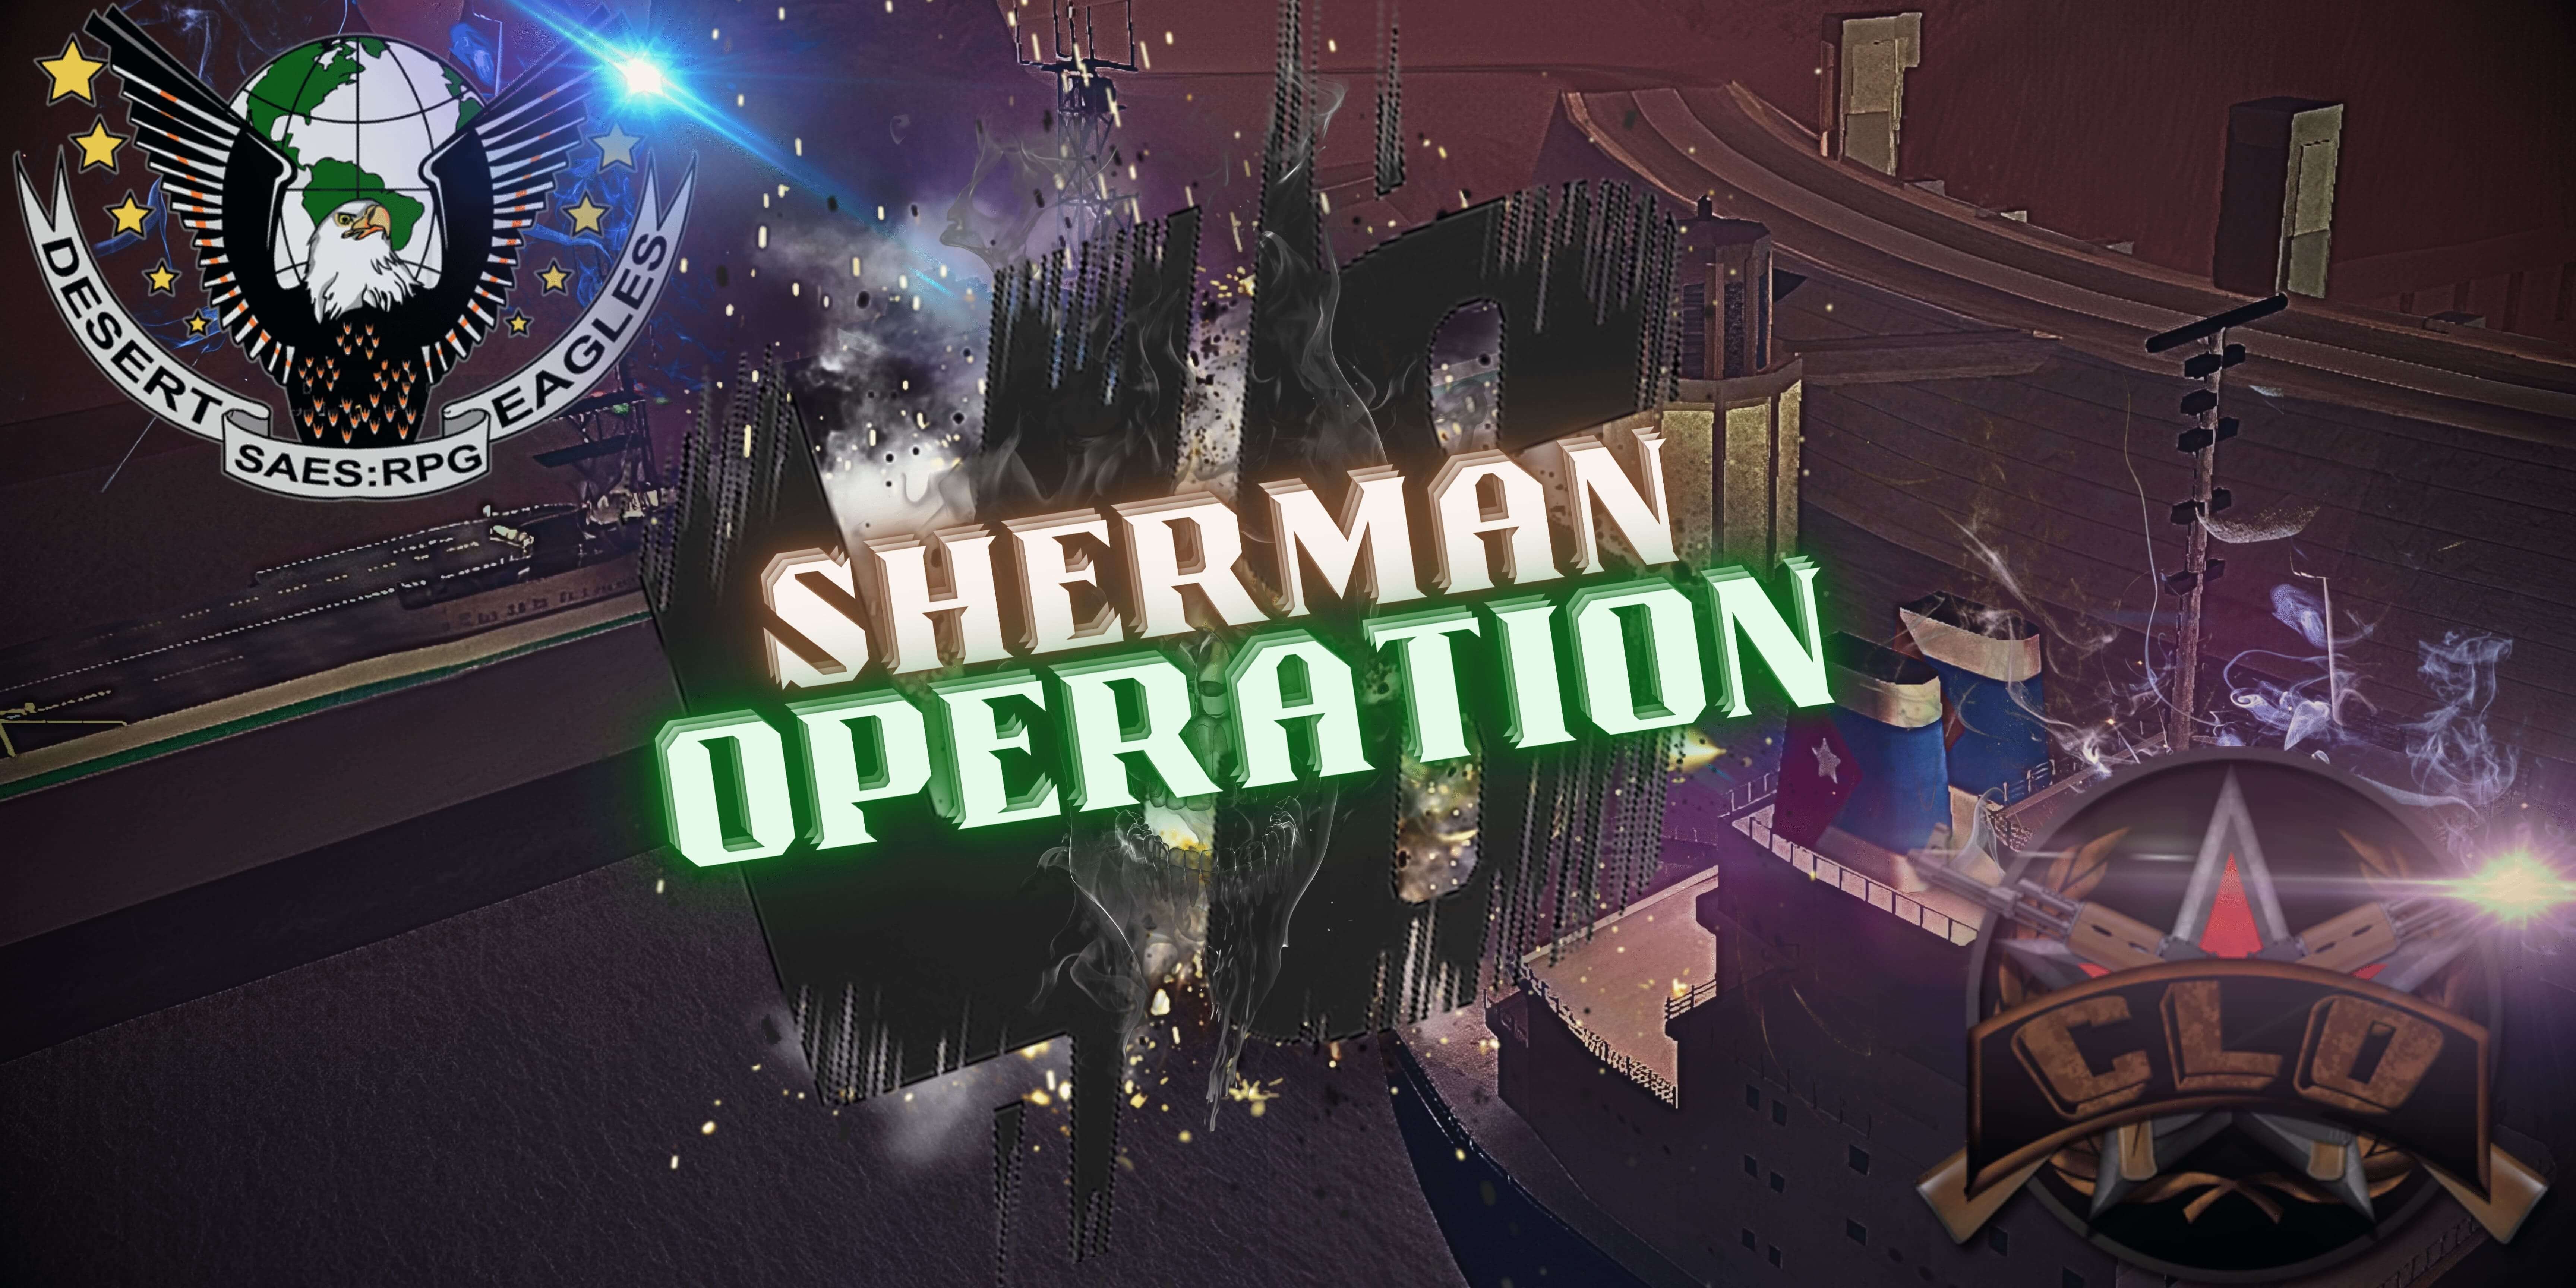 More information about "CLO vs DE - Sherman Operation"